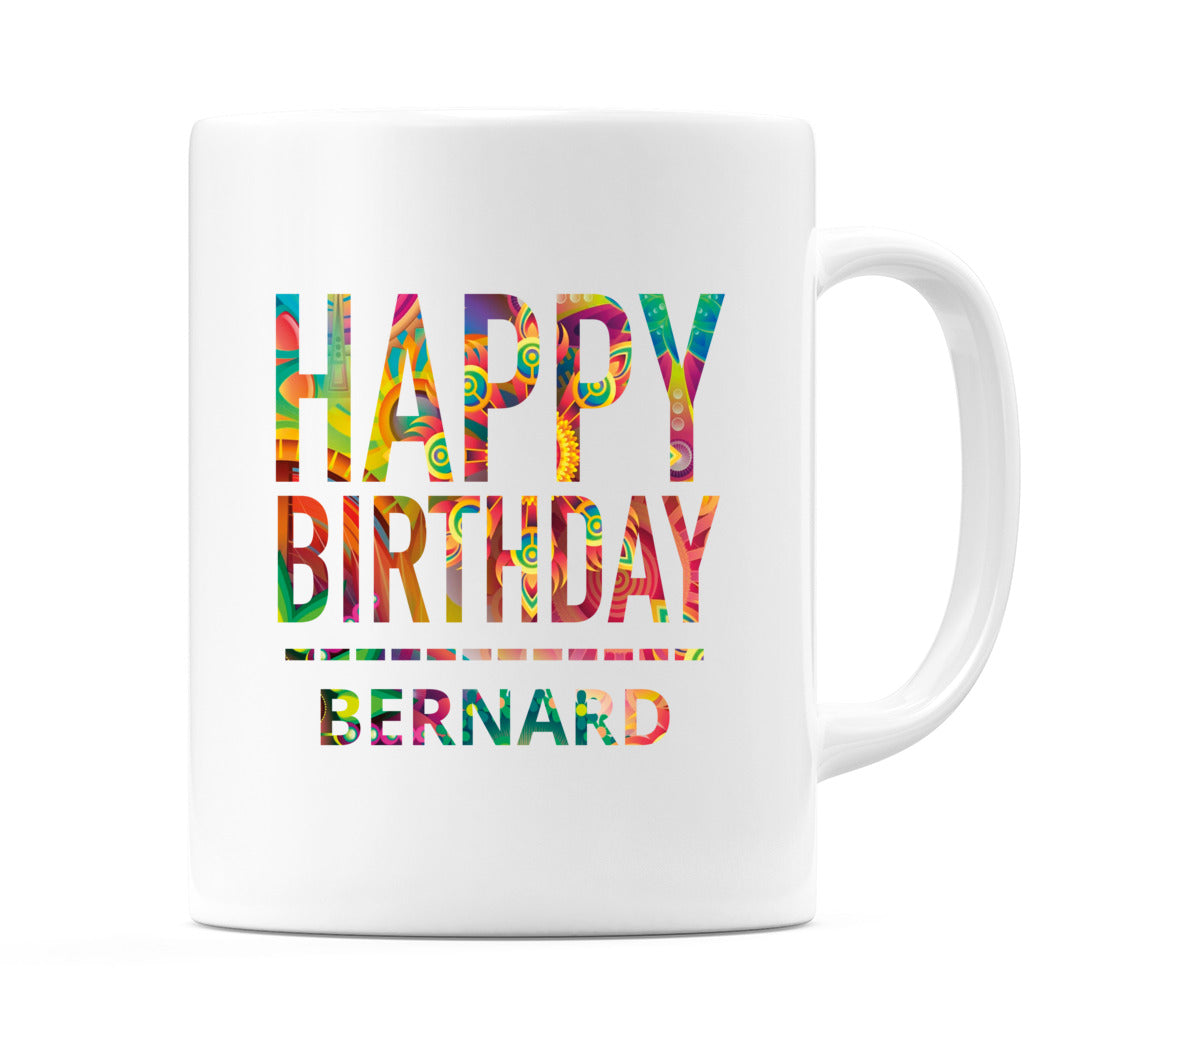 Happy Birthday Bernard (Tie Dye Effect) Mug Cup by WeDoMugs